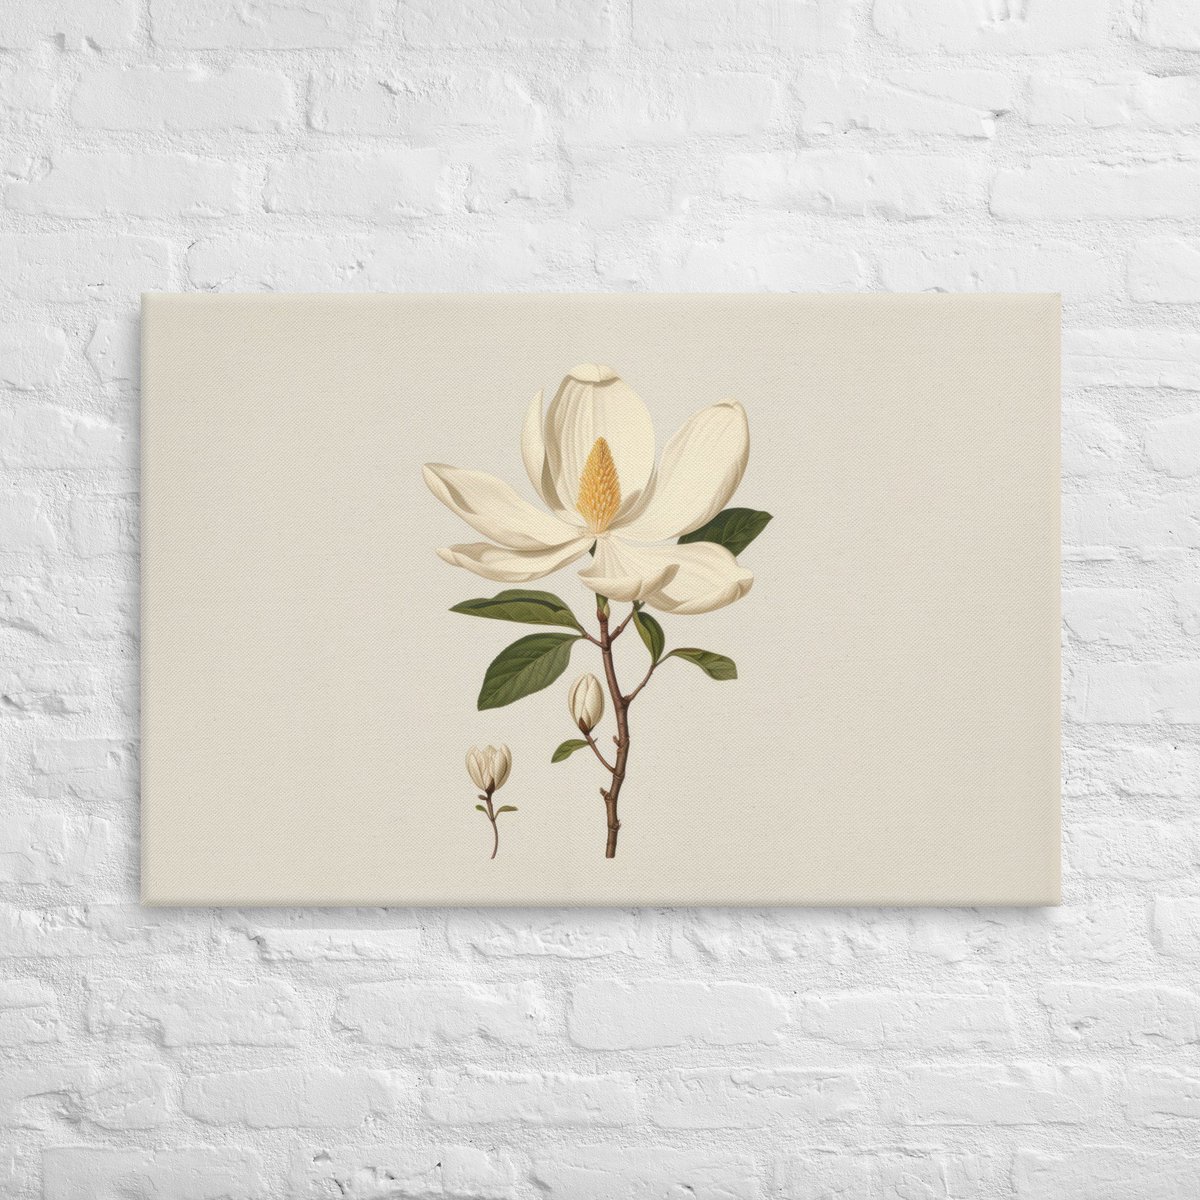 Ethereal Magnolia flower & branch, Cream Blooms in Botanical Splendor on Canvas etsy.me/3K2rsds #beige #bedroom #flowers #botanicalart #magnoliaflower #floralartwork #canvaswallart #uniquegiftidea #creamcolor